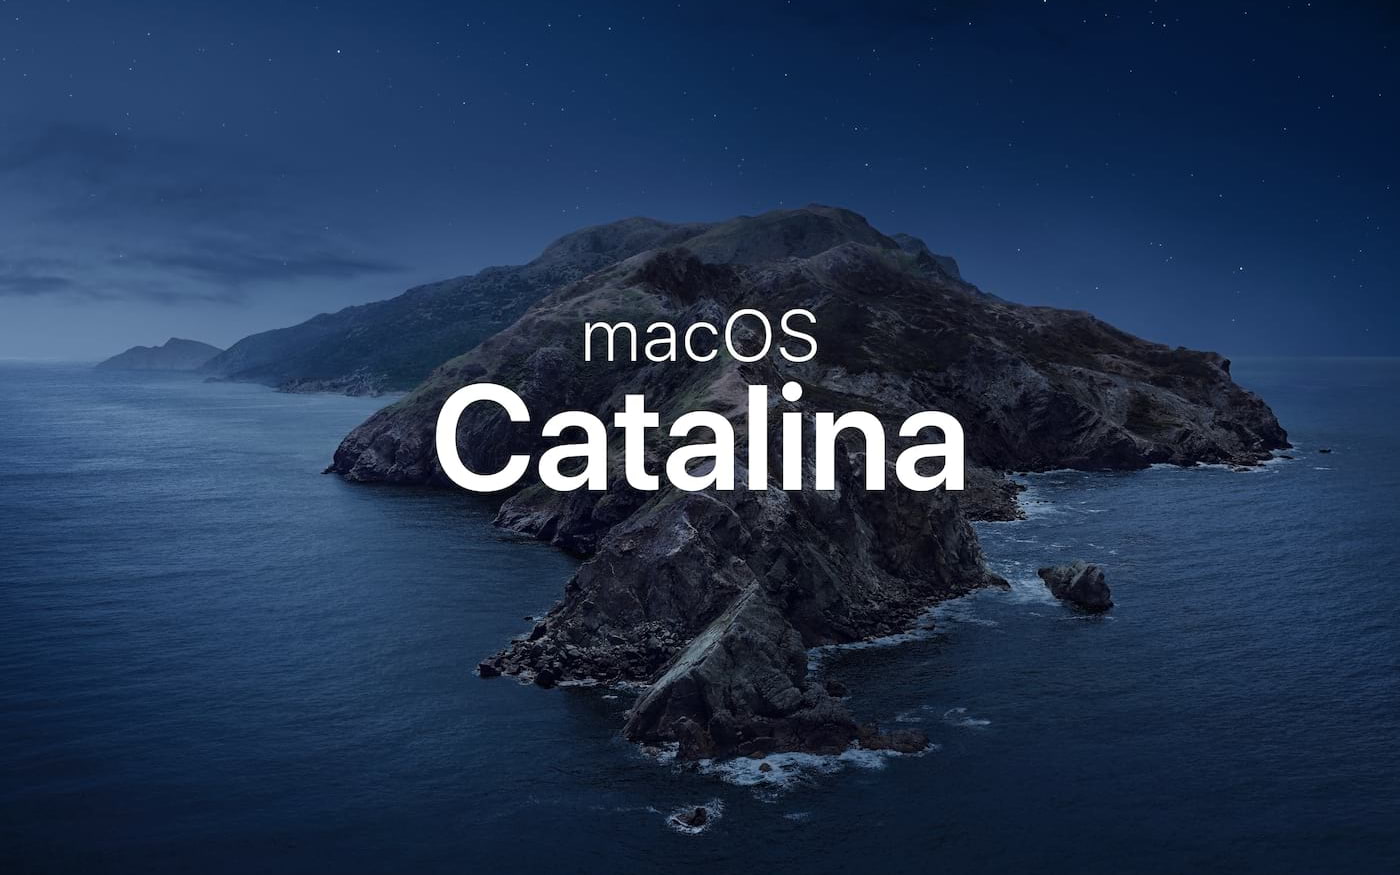 macos catalina download beta